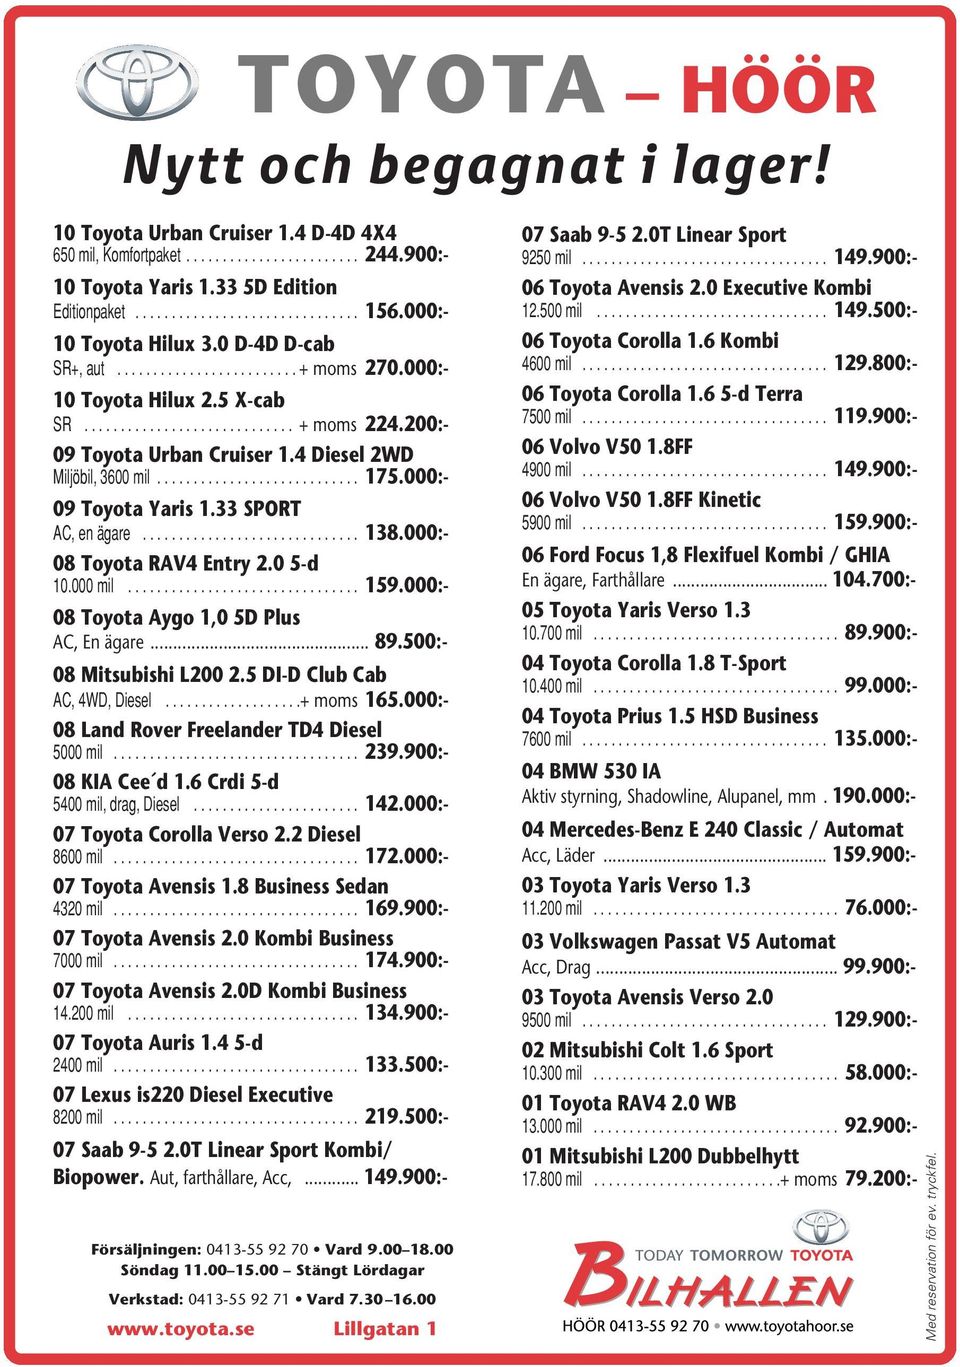 .. 138.000:- 08 Toyota RAV4 Entry 2.0 5-d 10.000mil... 159.000:- 08 Toyota Aygo 1,0 5D Plus AC, En ägare... 89.500:- 08 Mitsubishi L200 2.5 DI-D Club Cab AC,4WD,Diesel...+ moms 165.